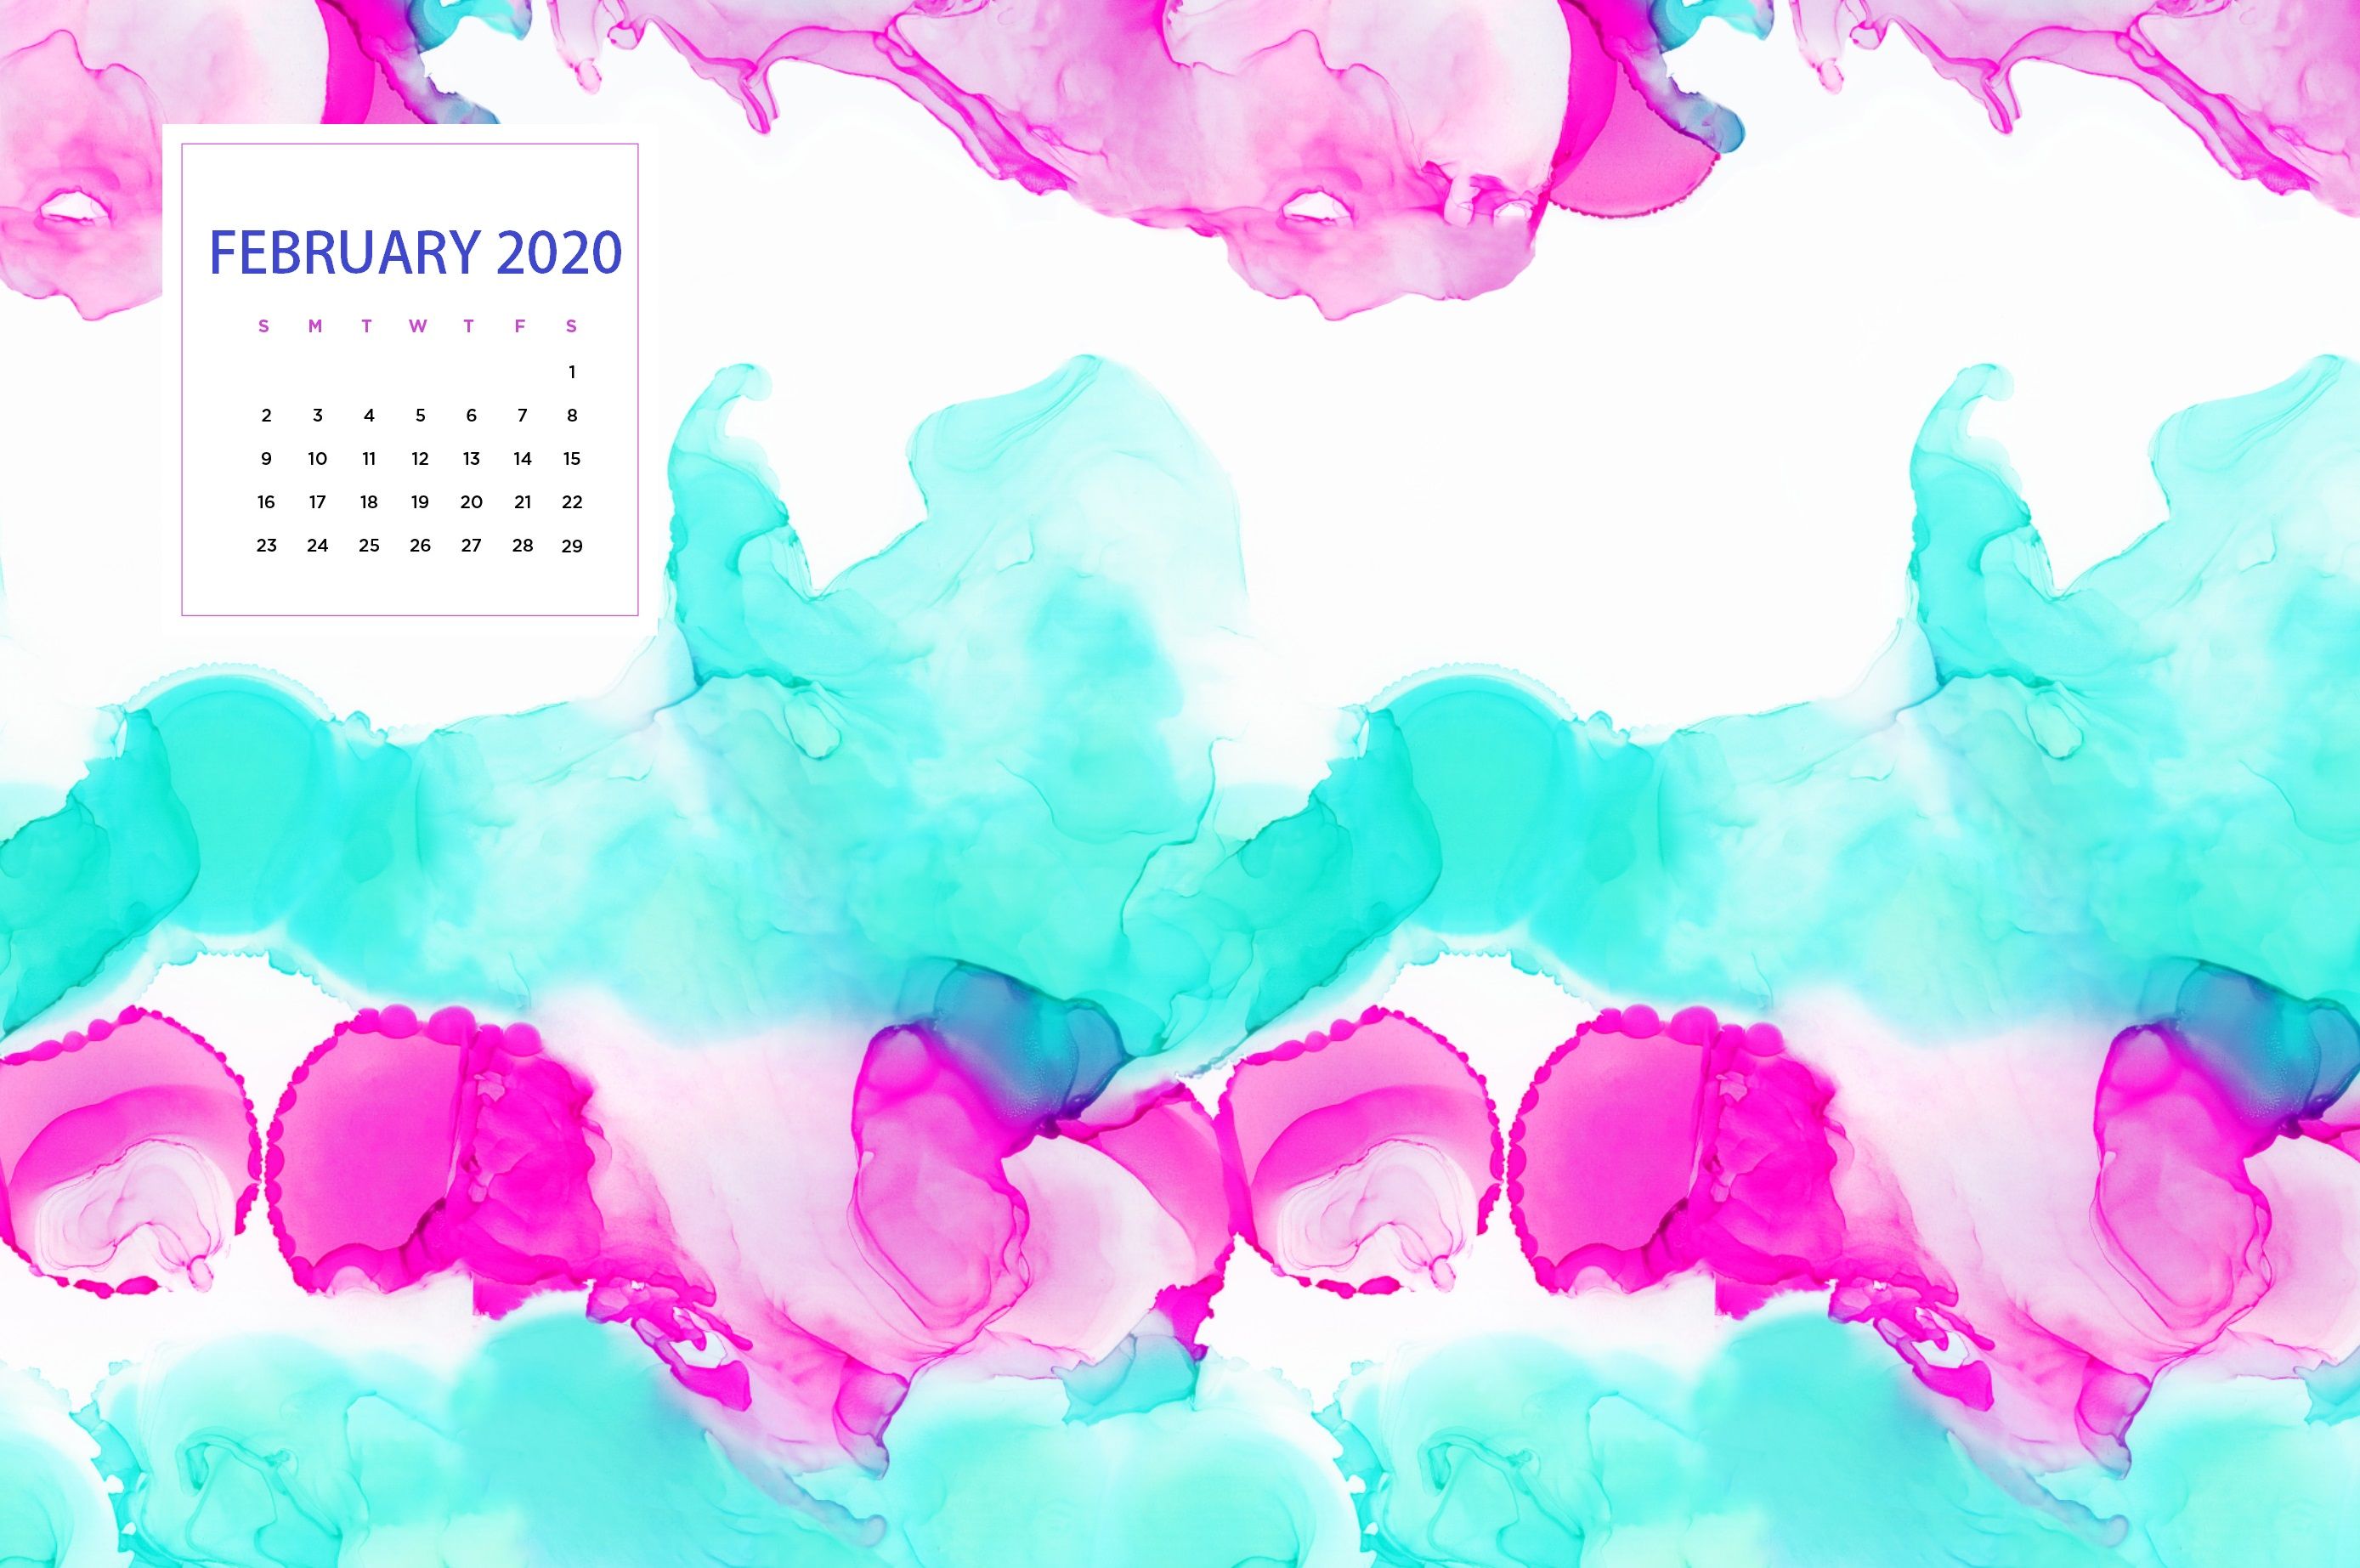 February 2020 Calendar Wallpapers   Top Free February 2020